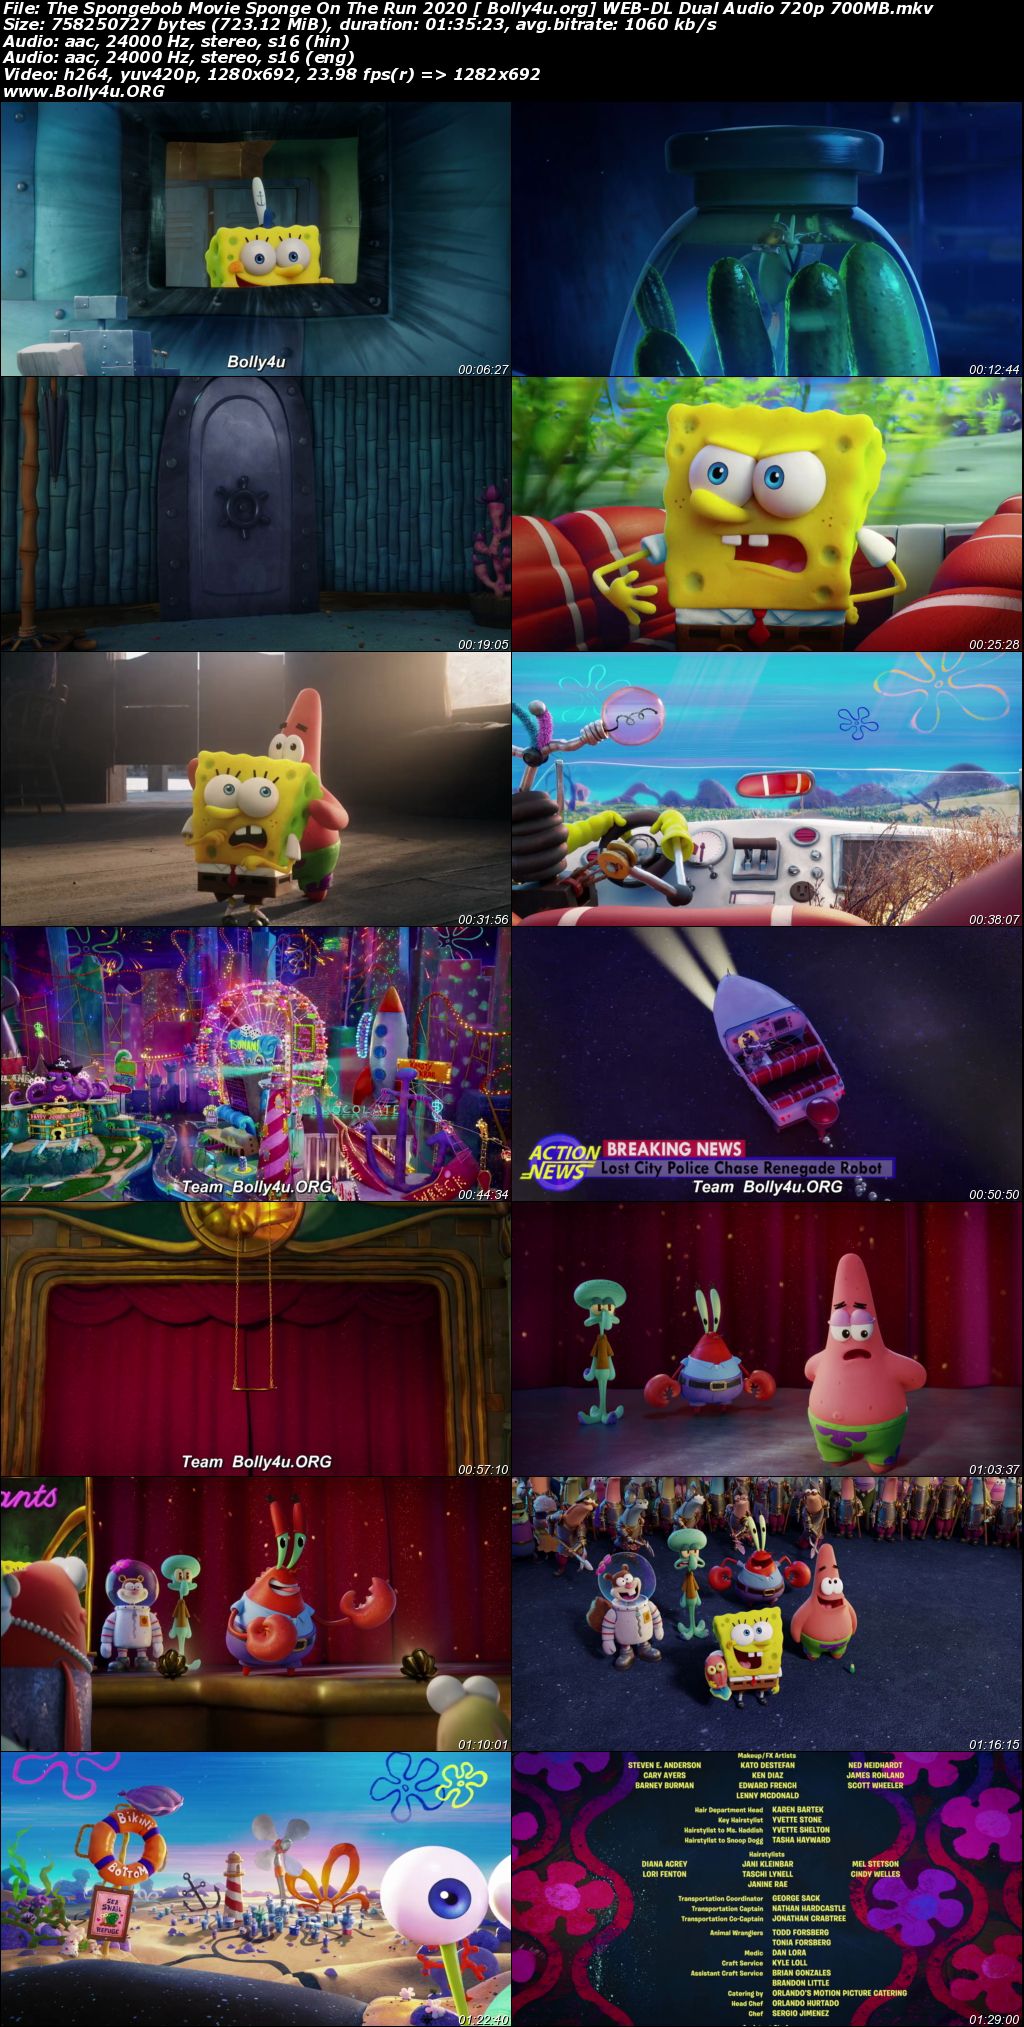 The Spongebob Movie Sponge On The Run 2020 WEB-DL 700MB Hindi Dual Audio 720p Download